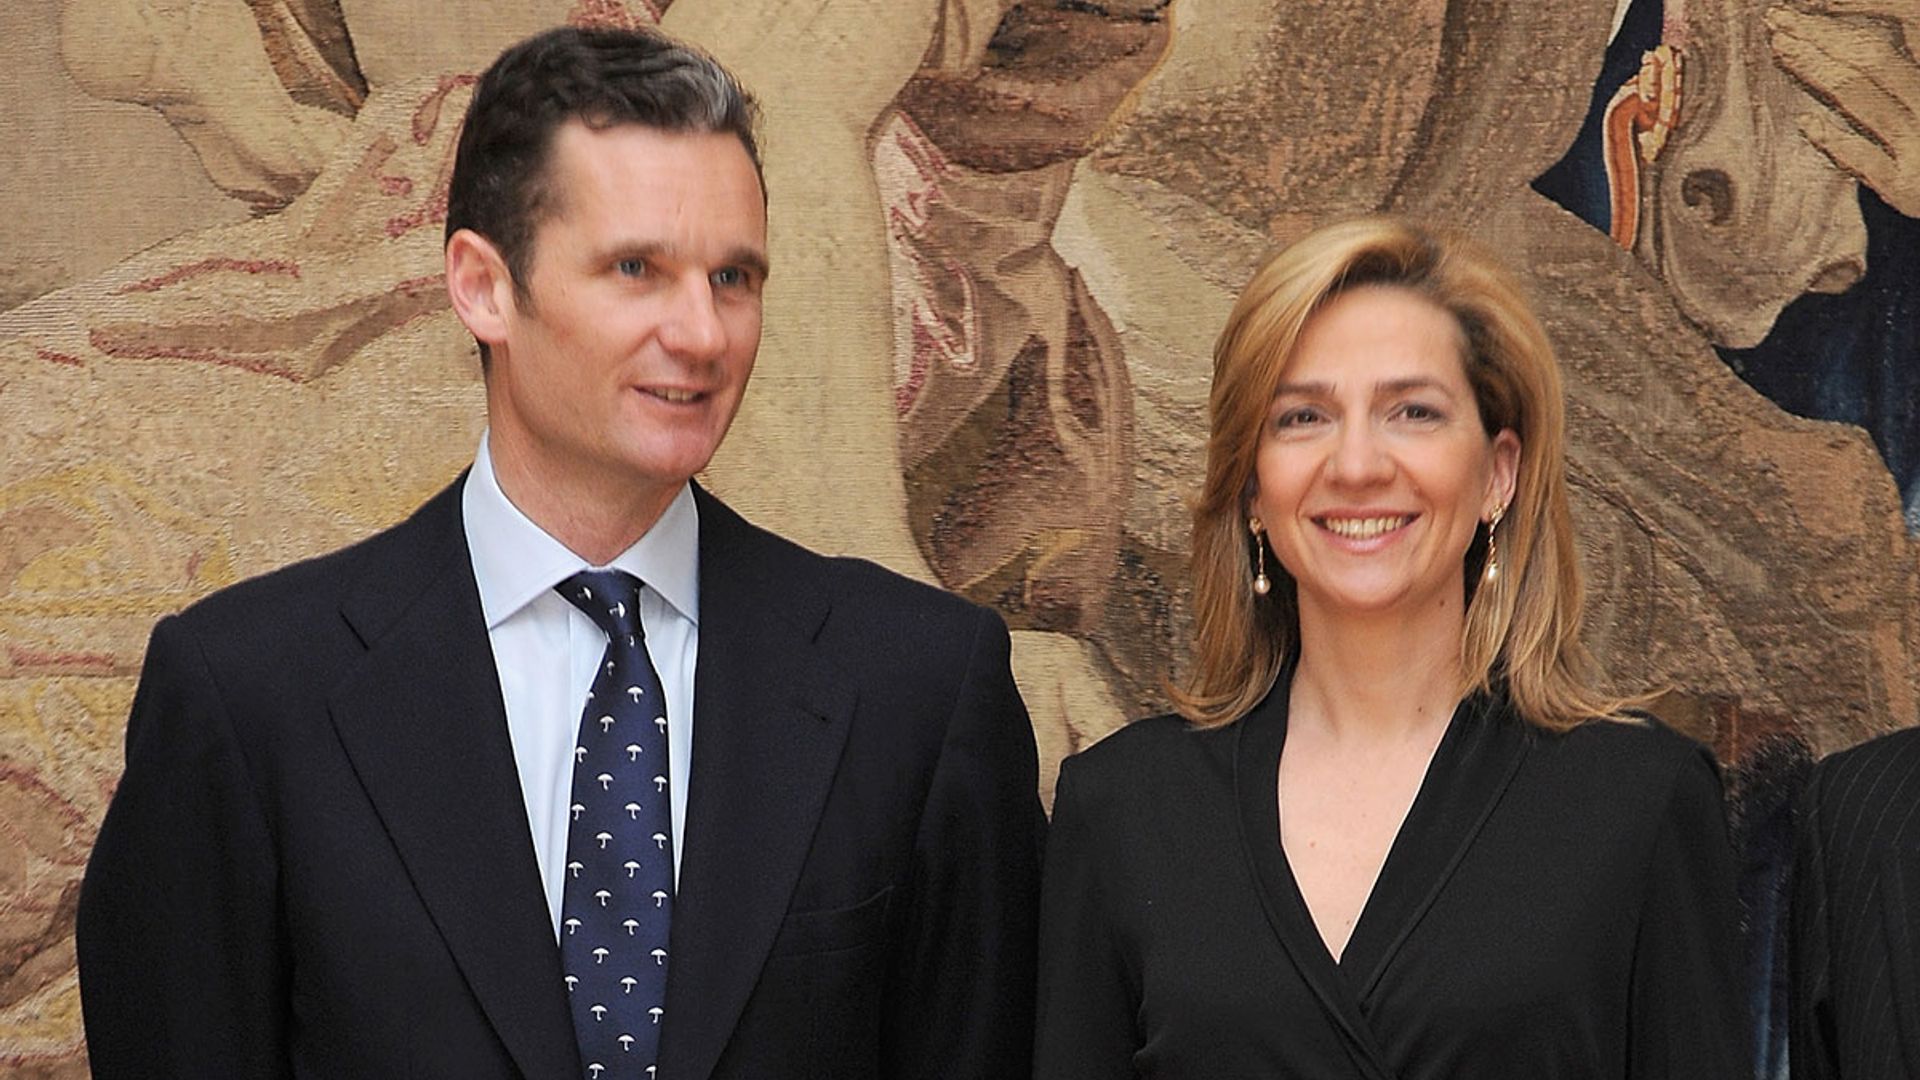 King Felipe of Spain's sister Infanta Cristina announces separation from Iñaki Urdangarin